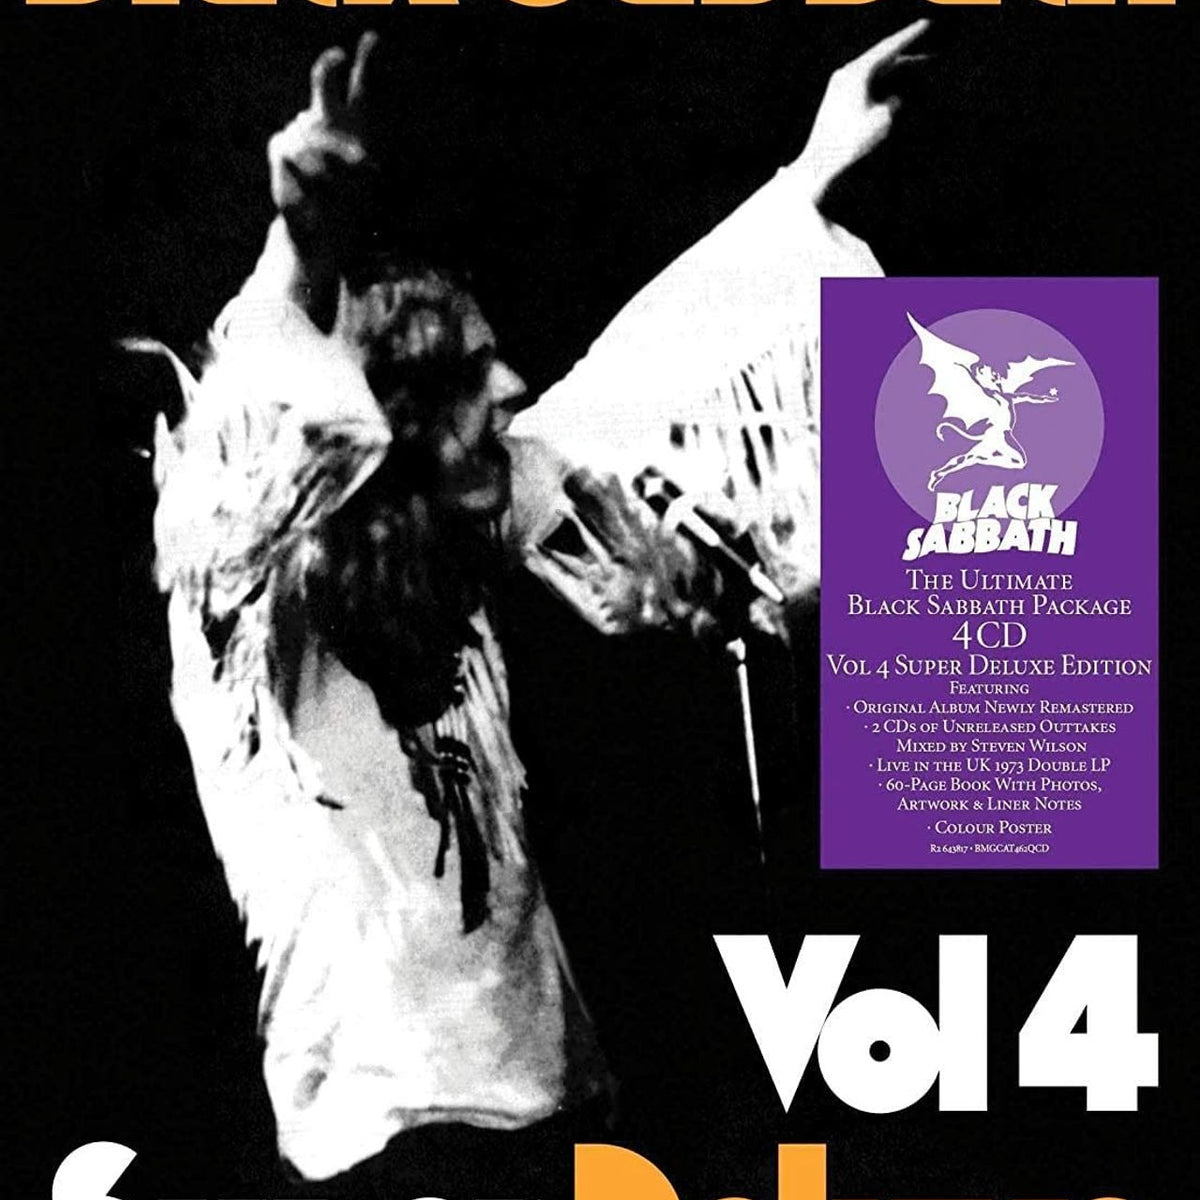 Black Sabbath Vol. 4 - Super Deluxe Edition (4CD) - Sealed UK Cd 